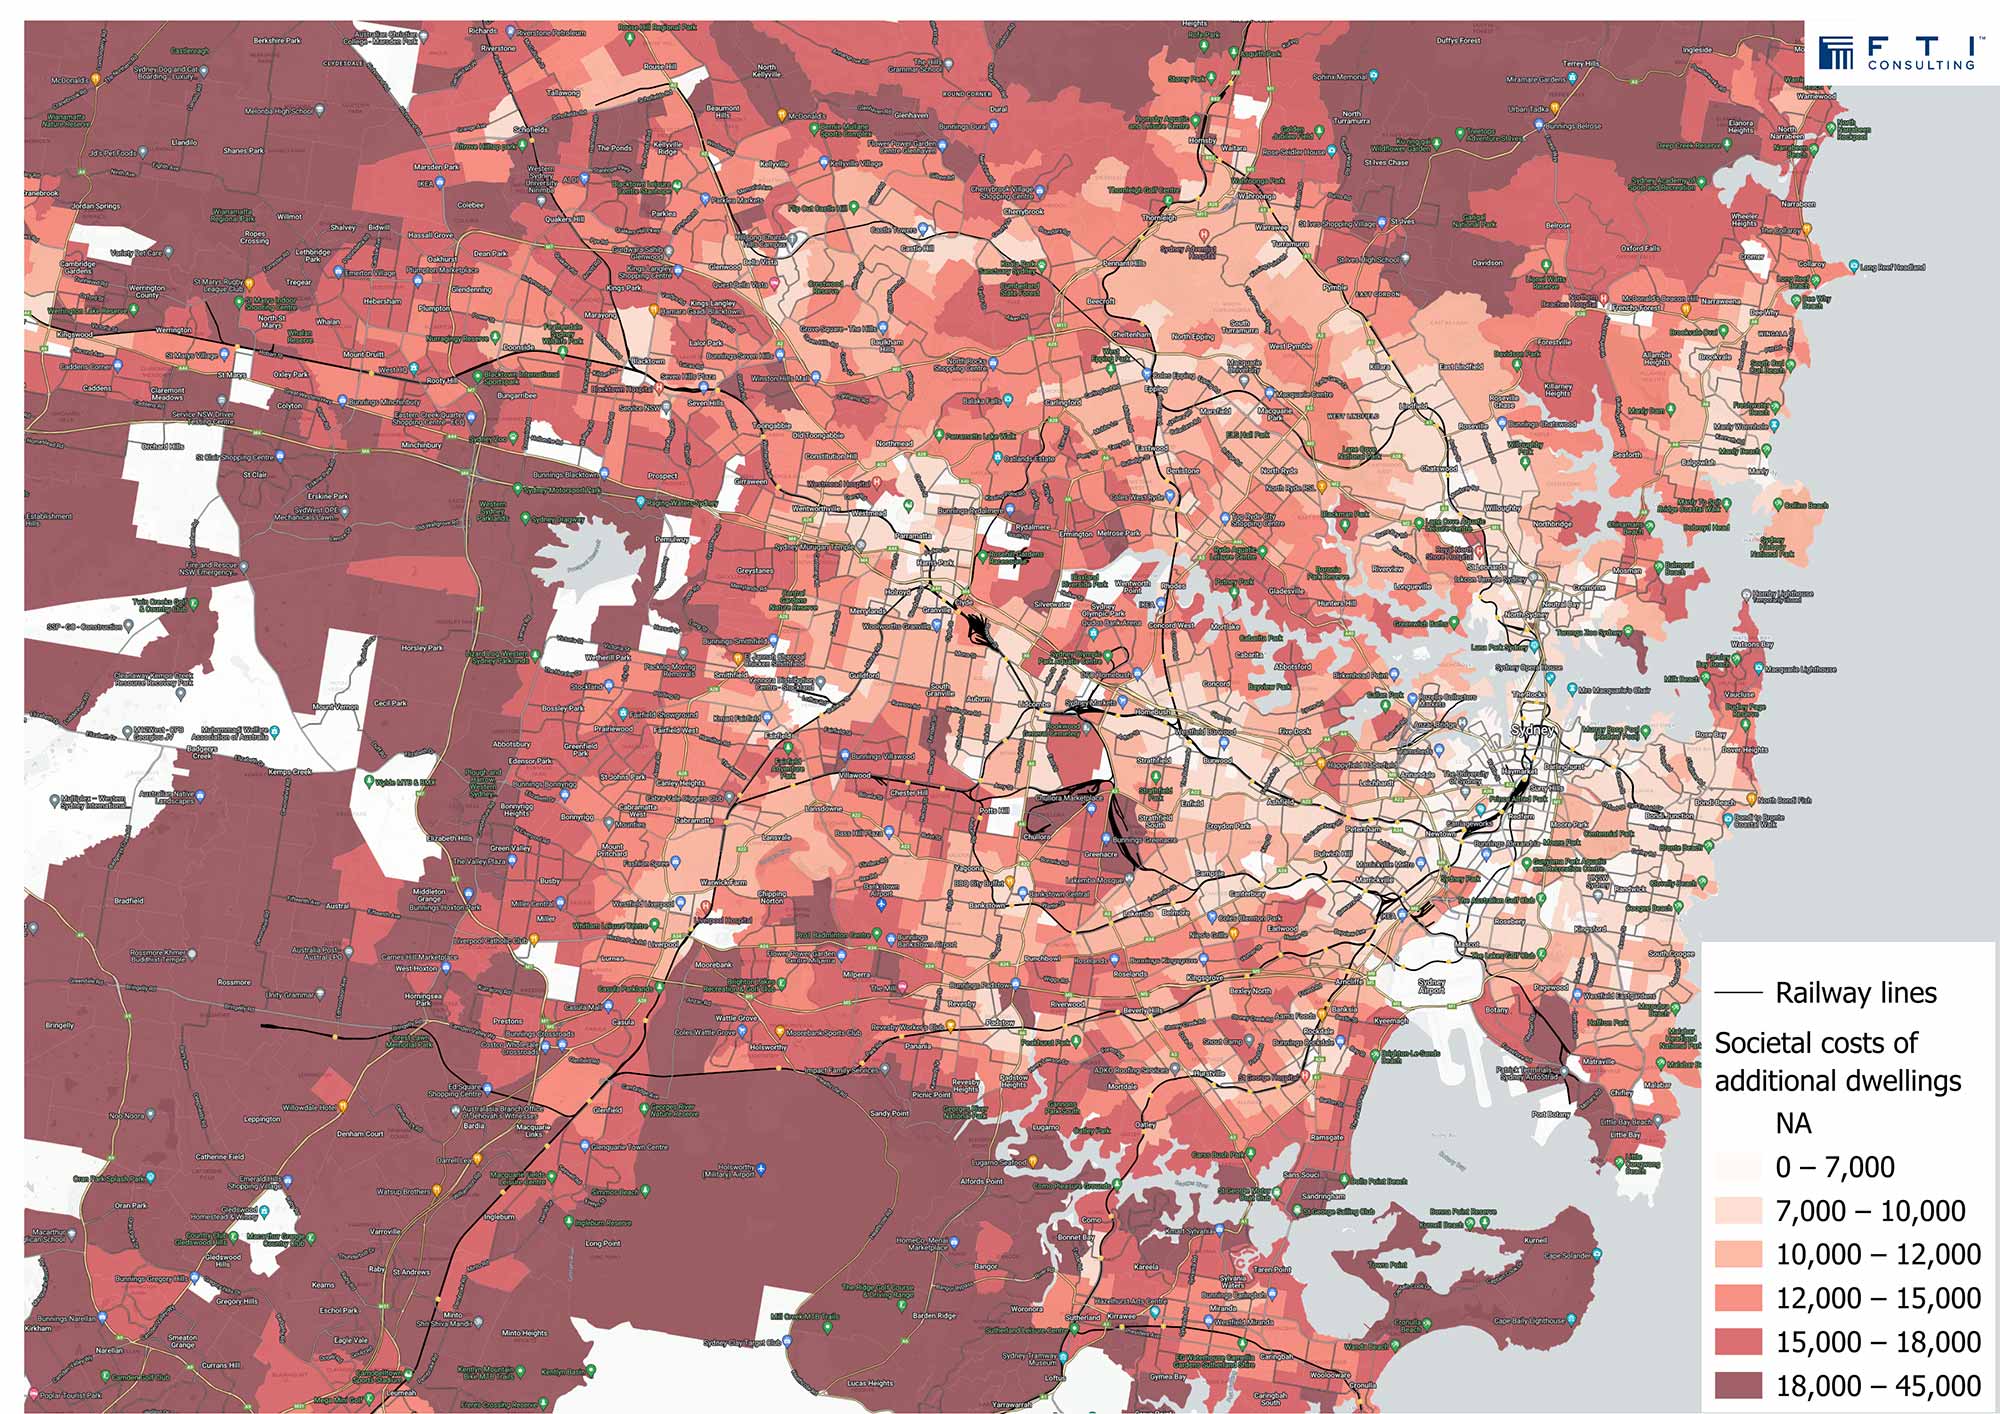 Sydney Railwaylines - Societal Costs of Additional Dwellings